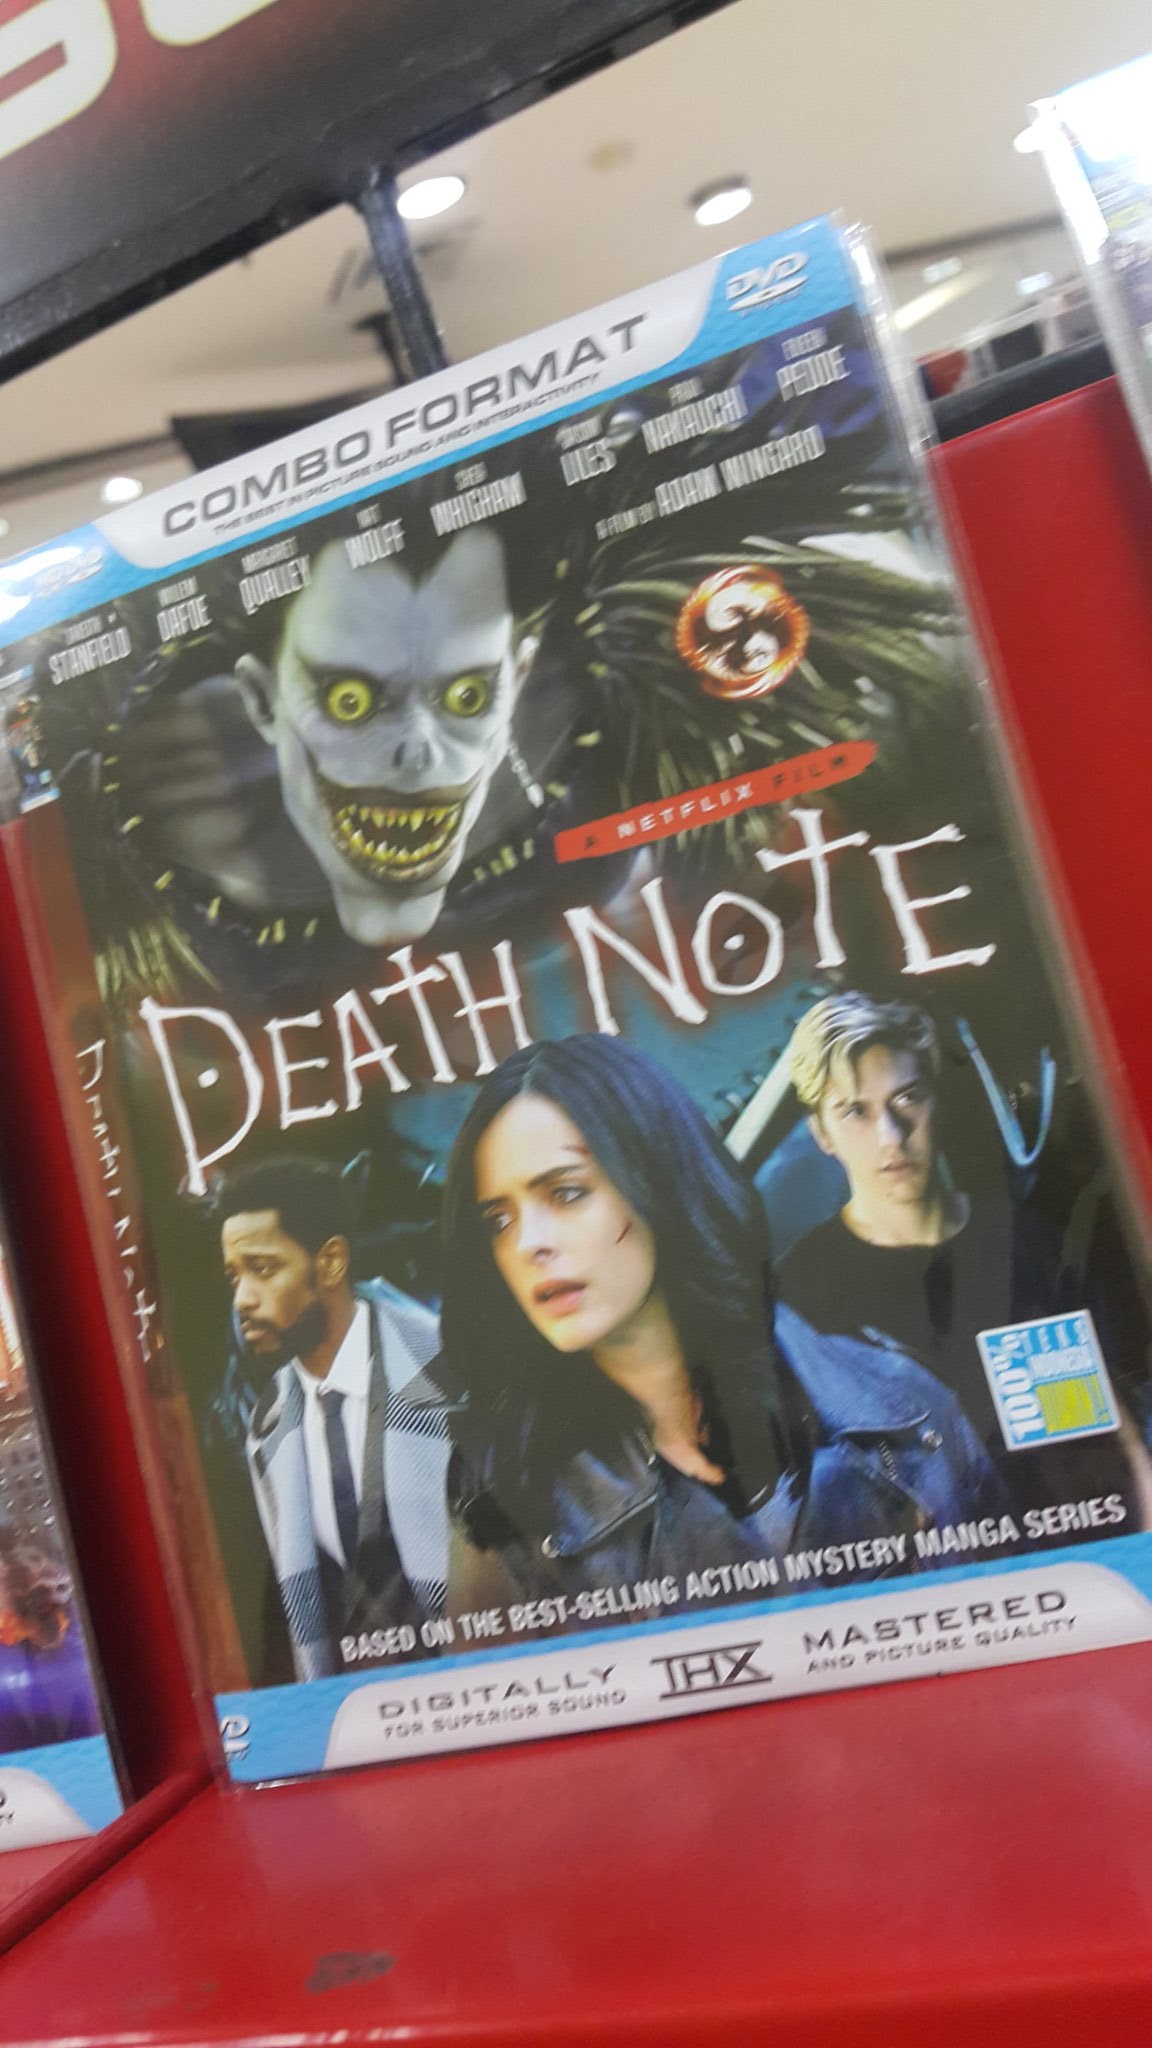 Death Note Hilarious Bootleg Dvd Cover Netflix のハリウッド版実写 デスノート が不評なので 少し面白そうにしてあげた海賊版dvdのジャケット B Side Of Cia